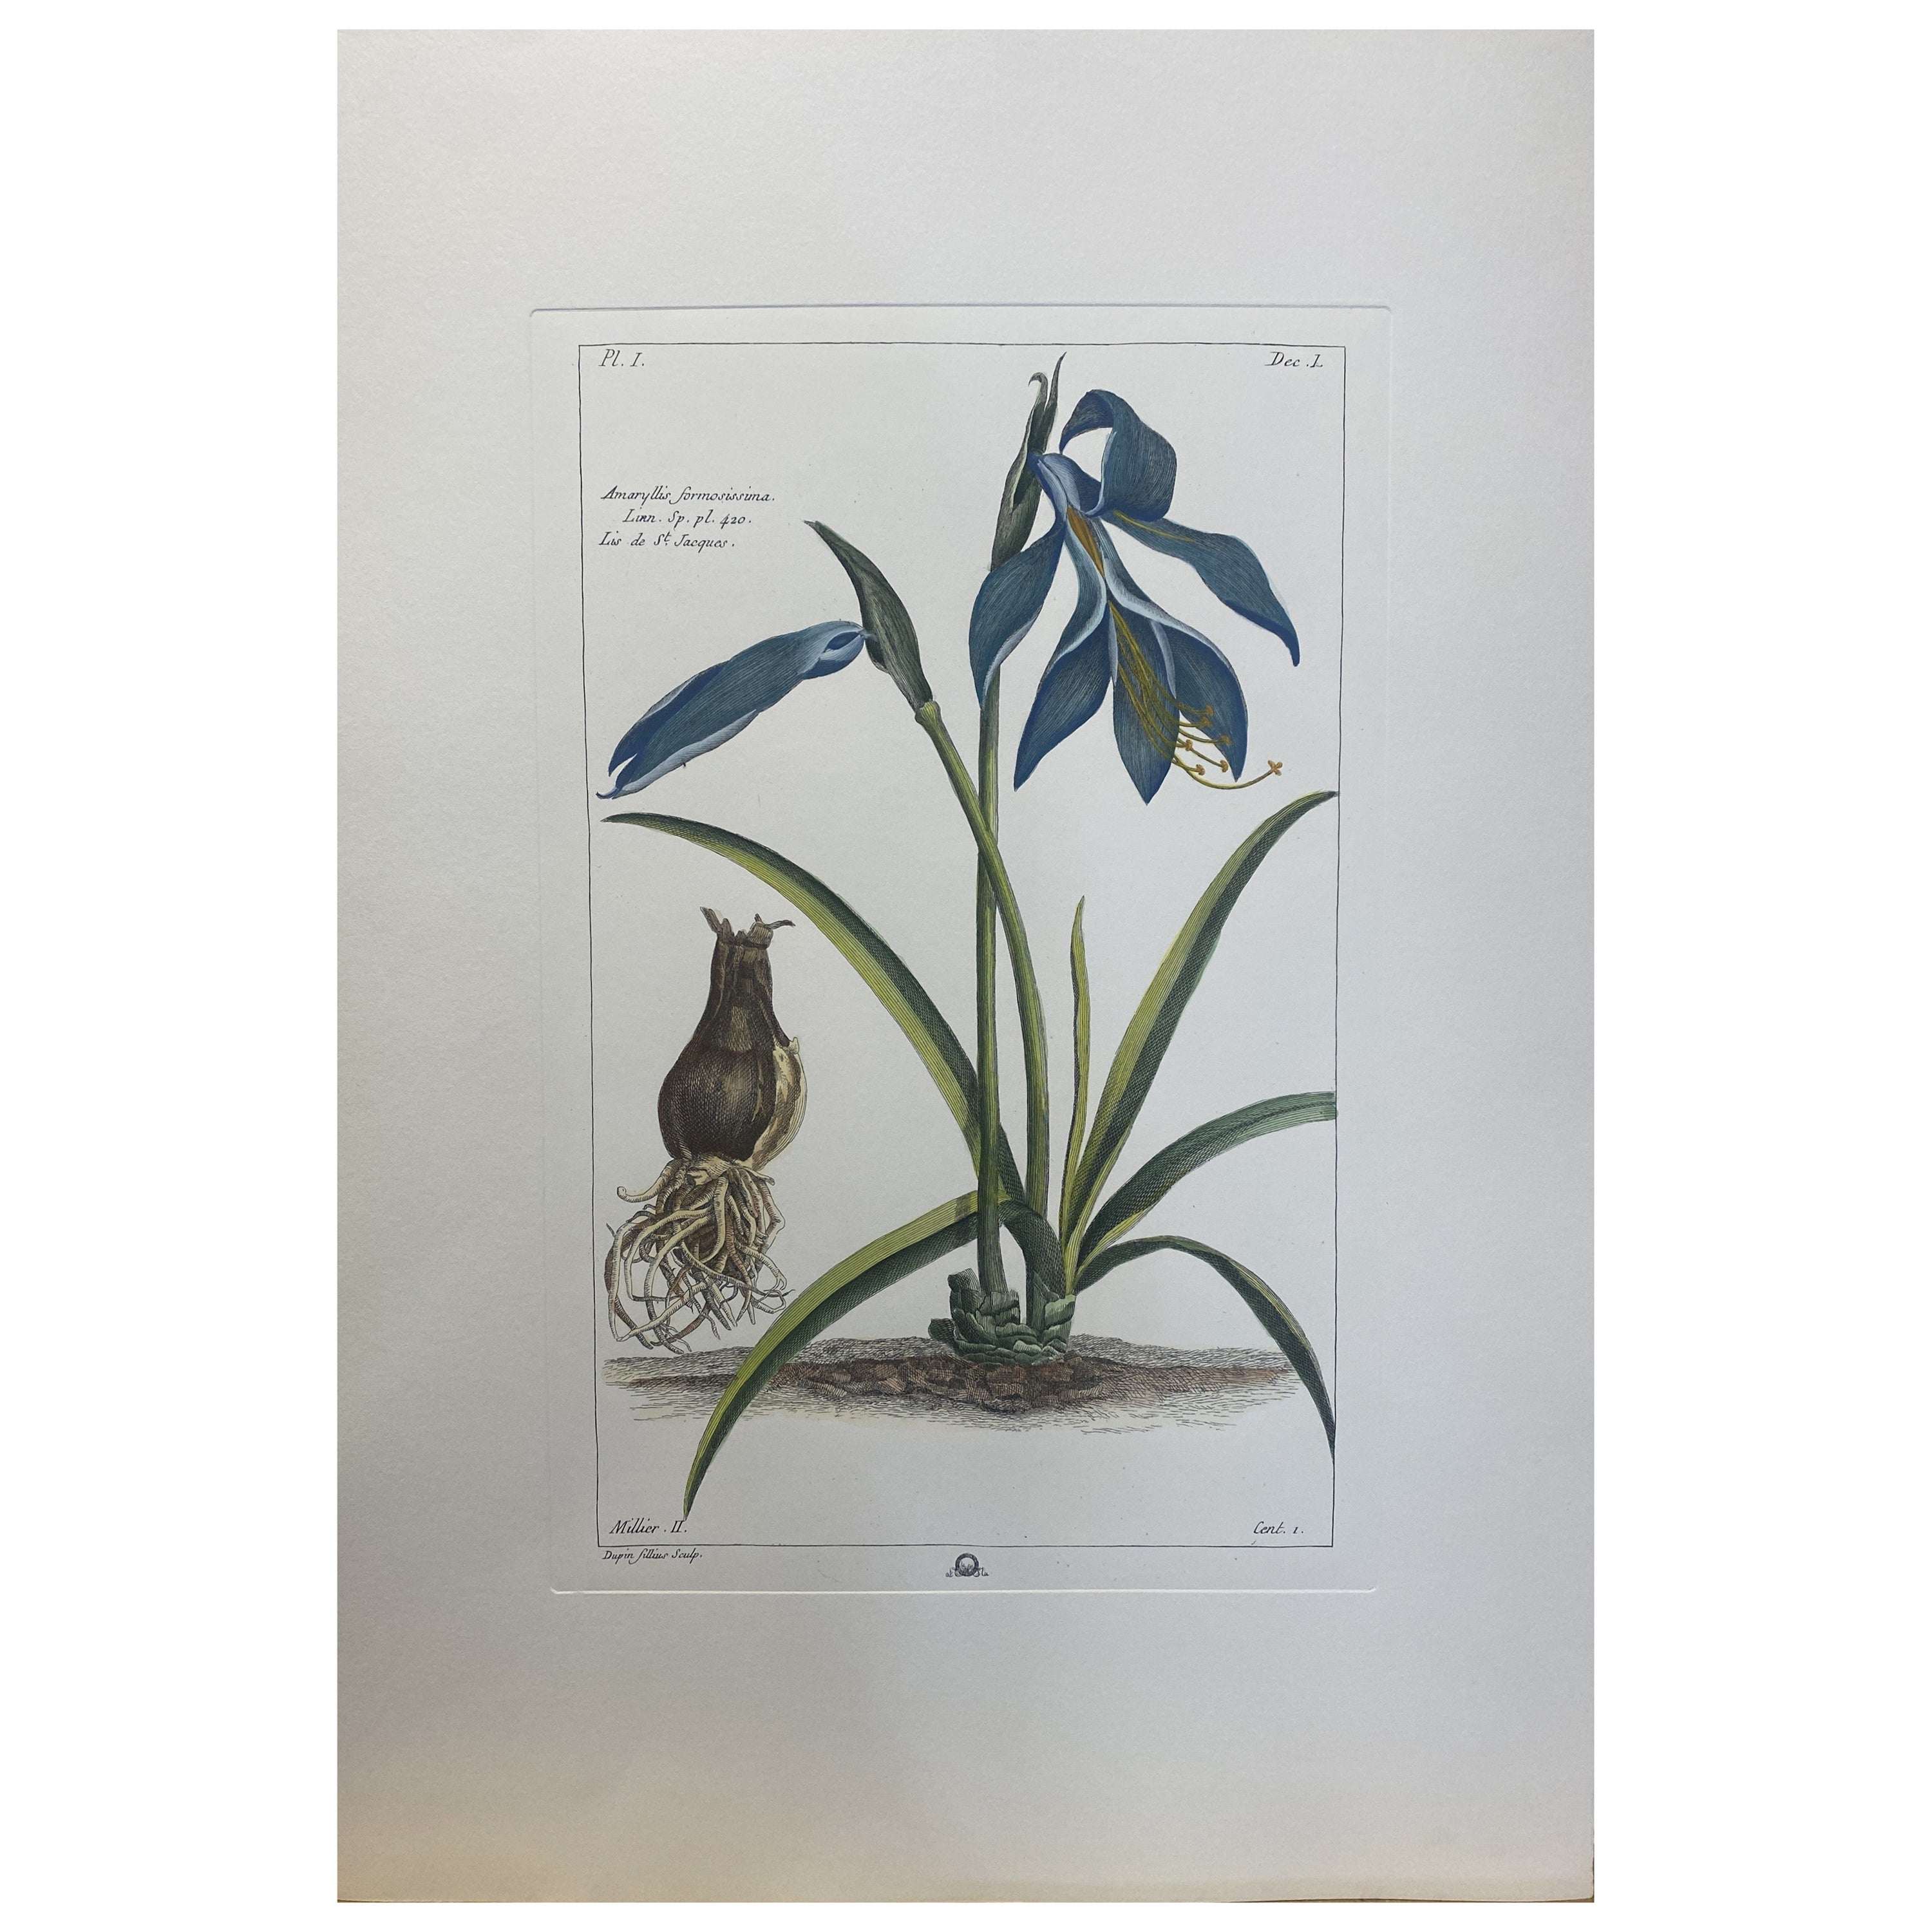 Italian Contemporary Hand Painted Botanical Print "Amaryllis Formosissima" 